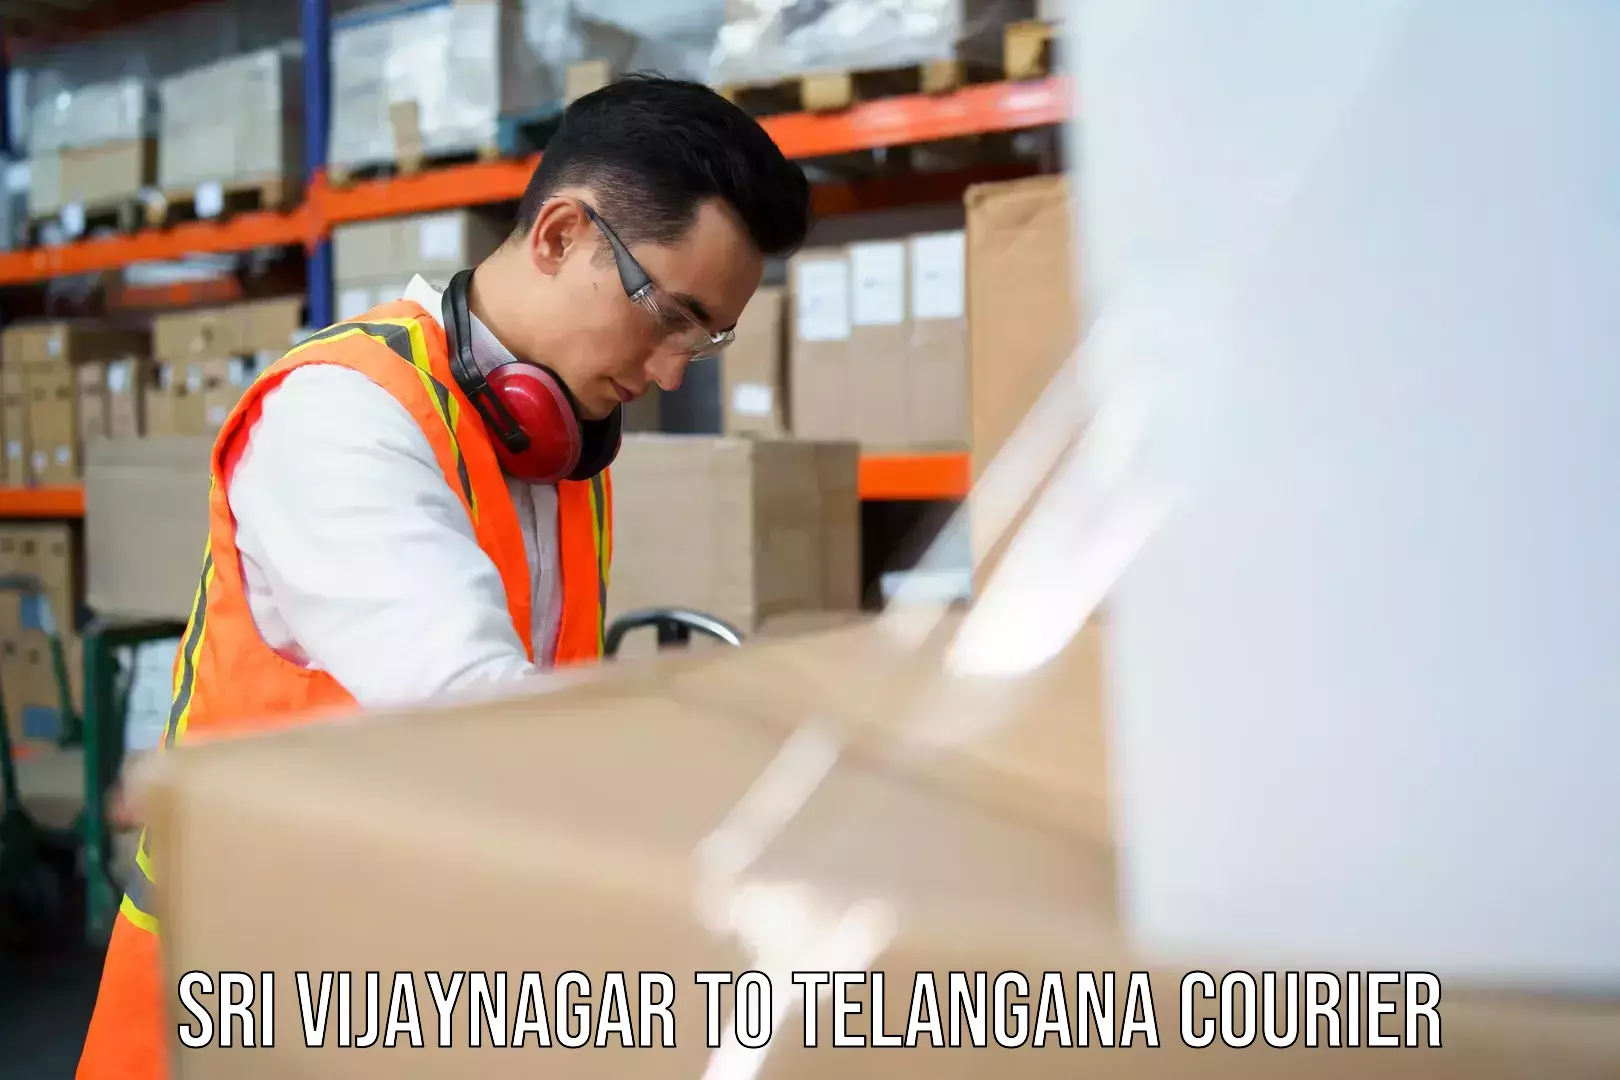 24/7 courier service Sri Vijaynagar to Telangana